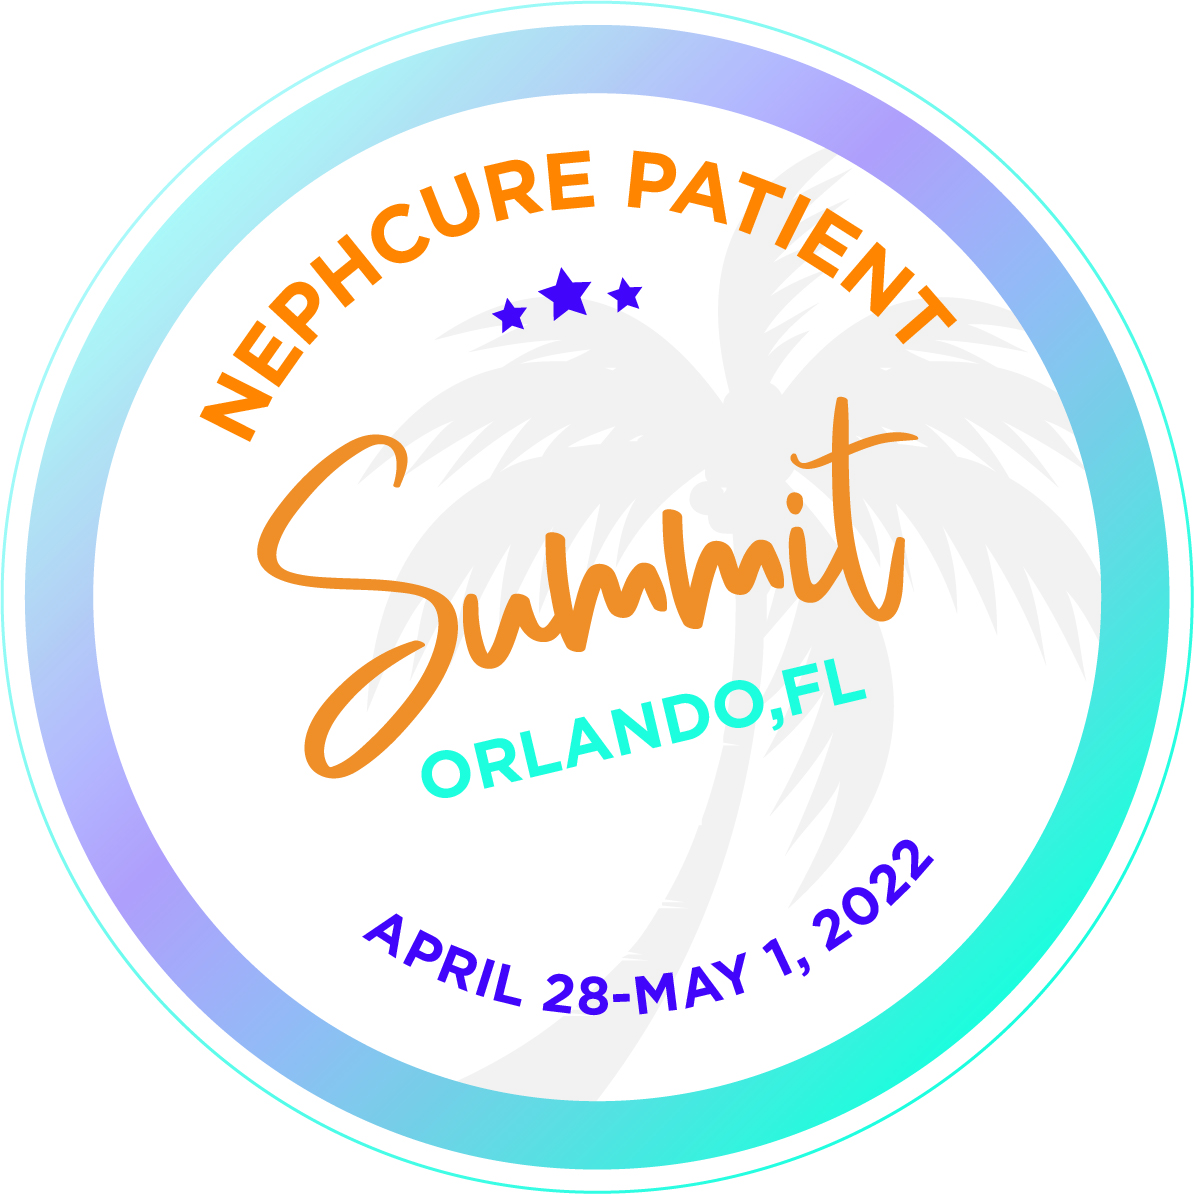 NephCure Patient Summit Registrations